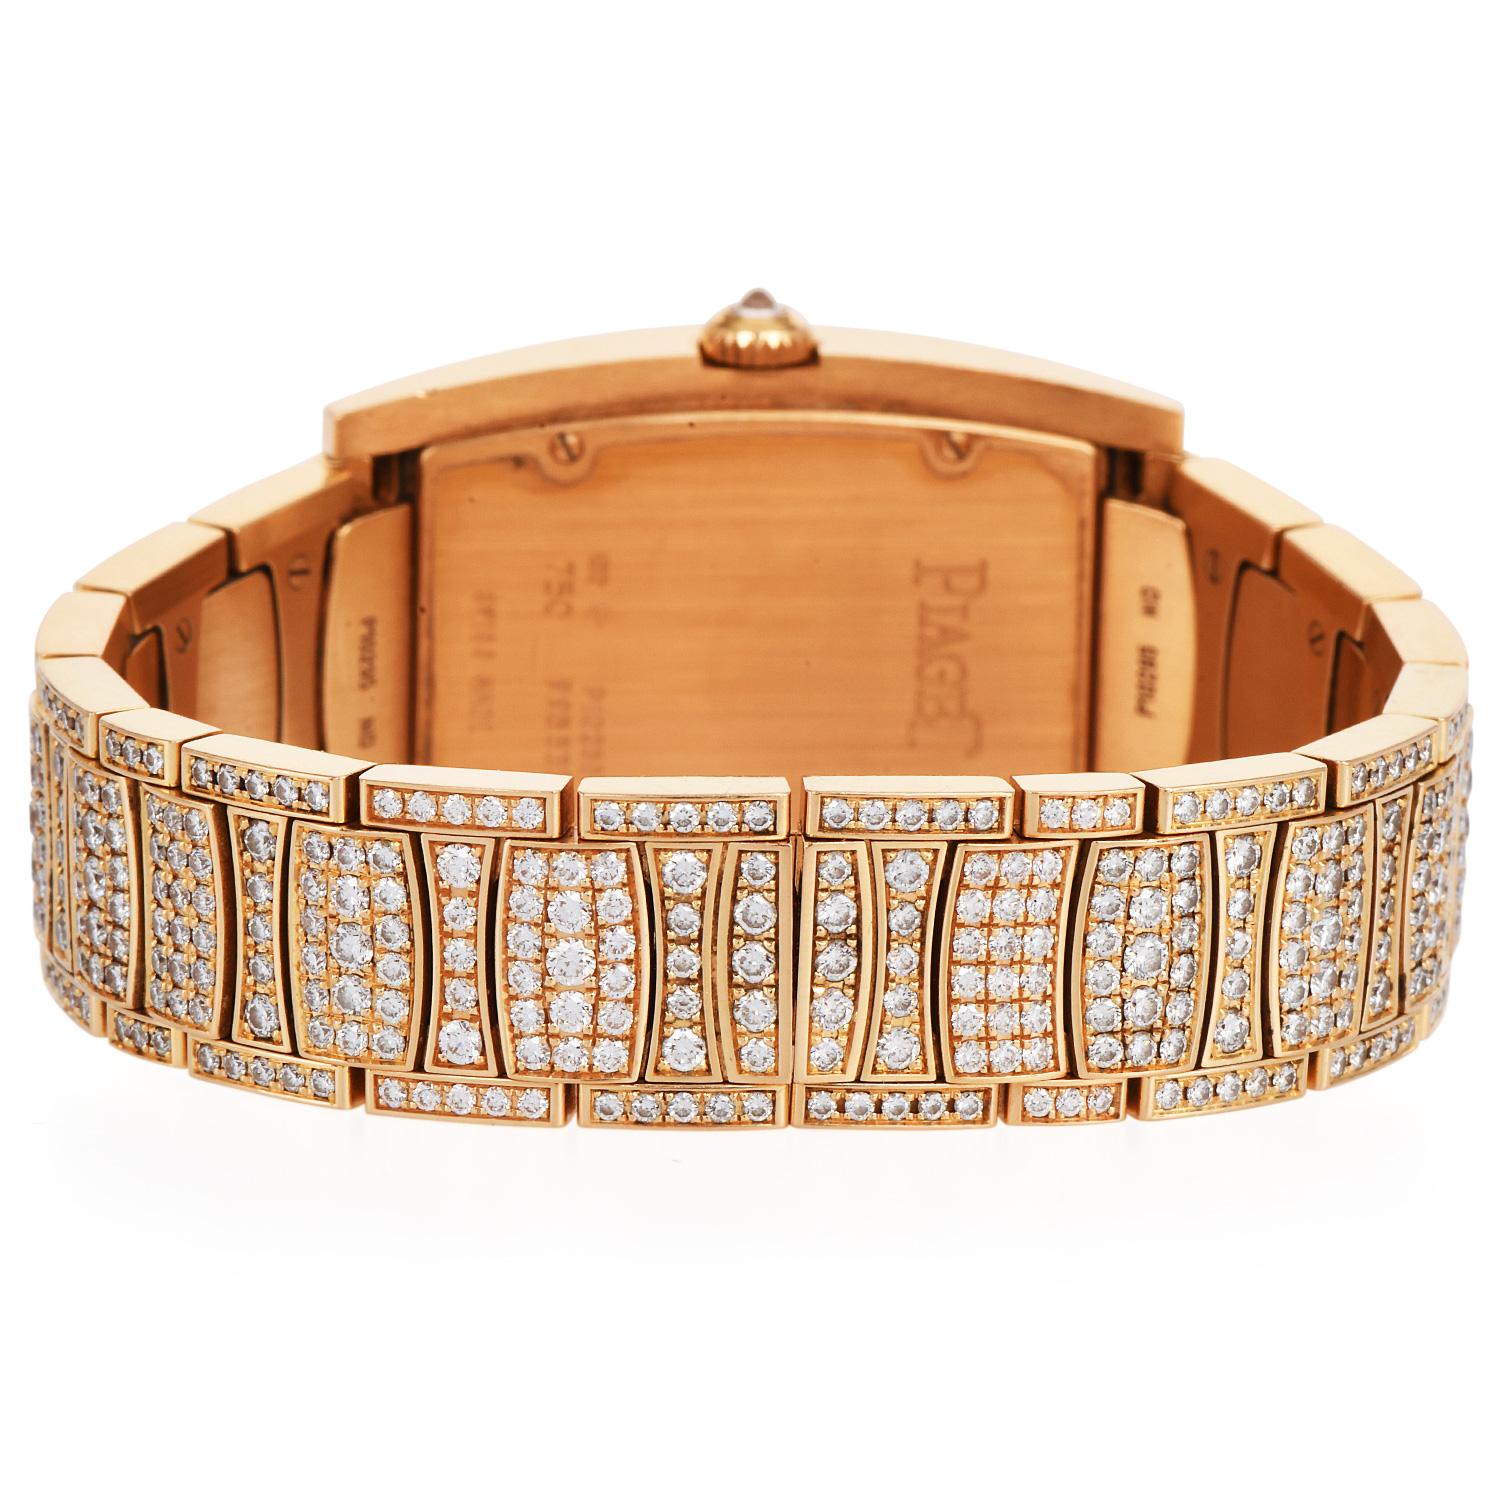 Round Cut Piaget Limelight Tonneau Diamond Bracelet Gold Watch 